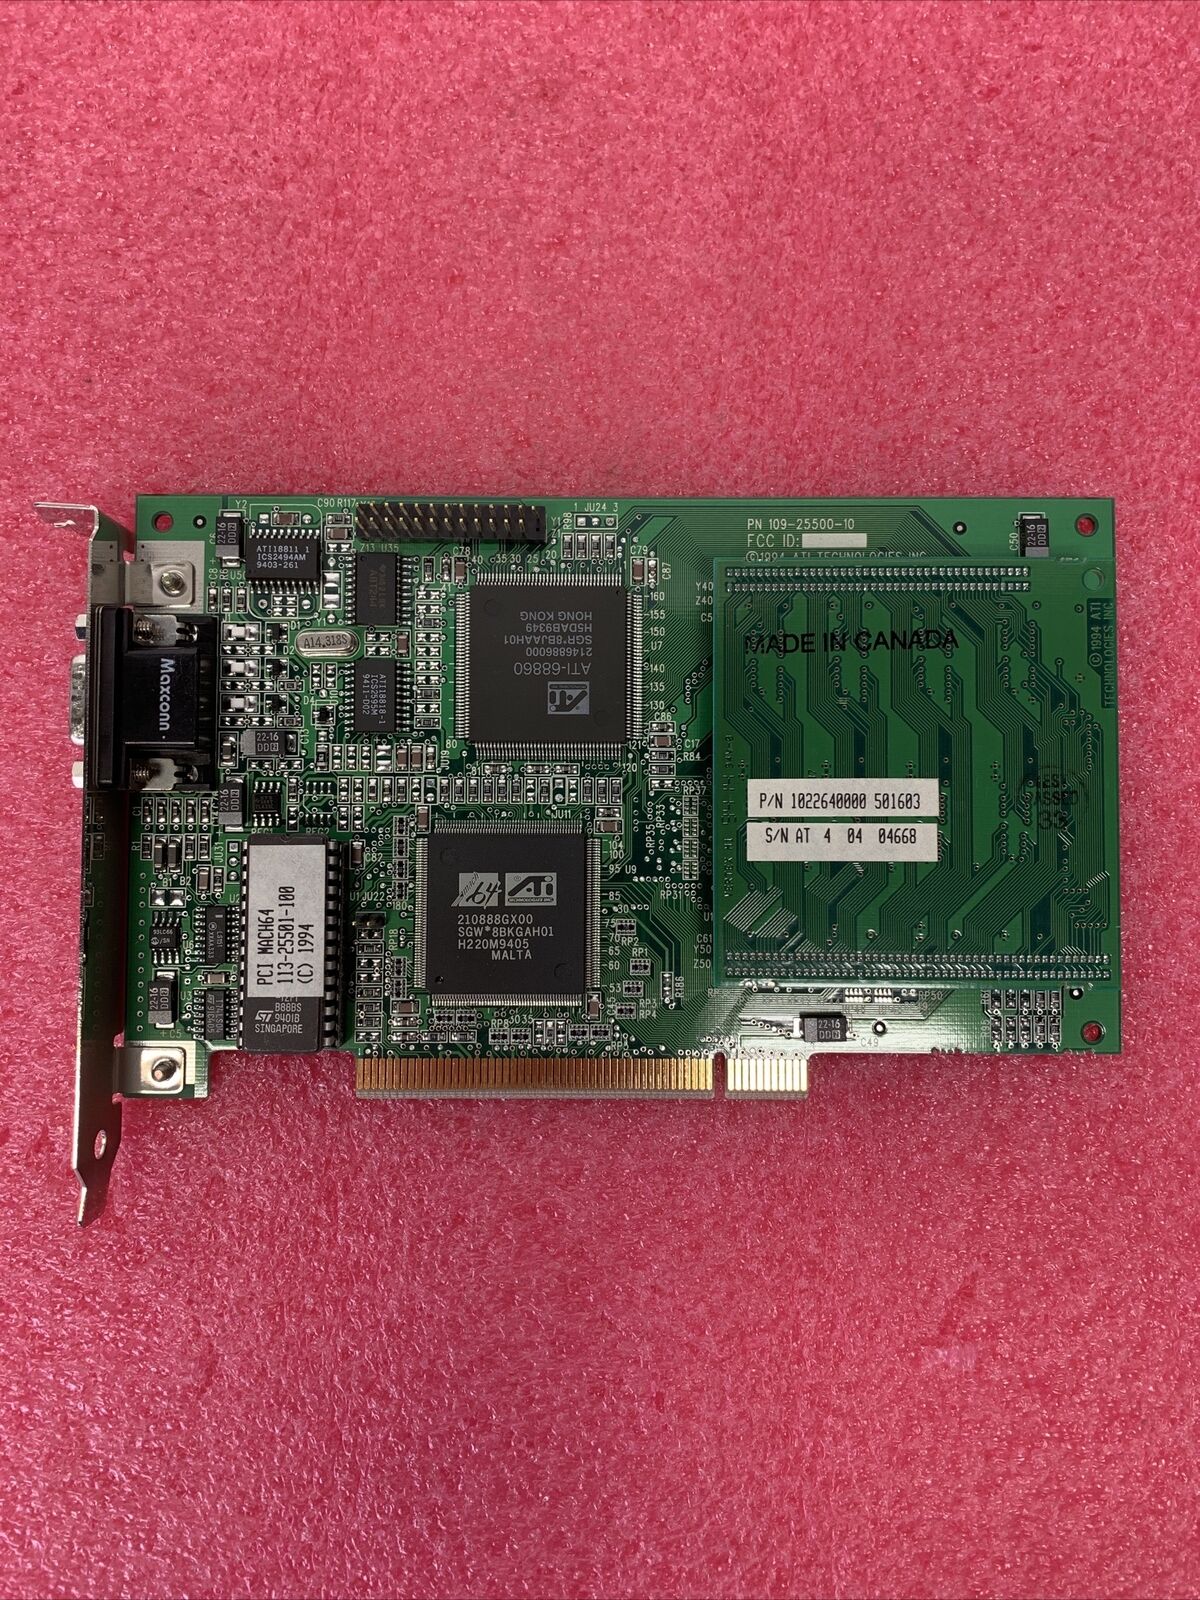 ATI PCI MACH64 109-25500-10 Graphics Card w/ ATI 109-26400-00 2MB VRAM ADDON